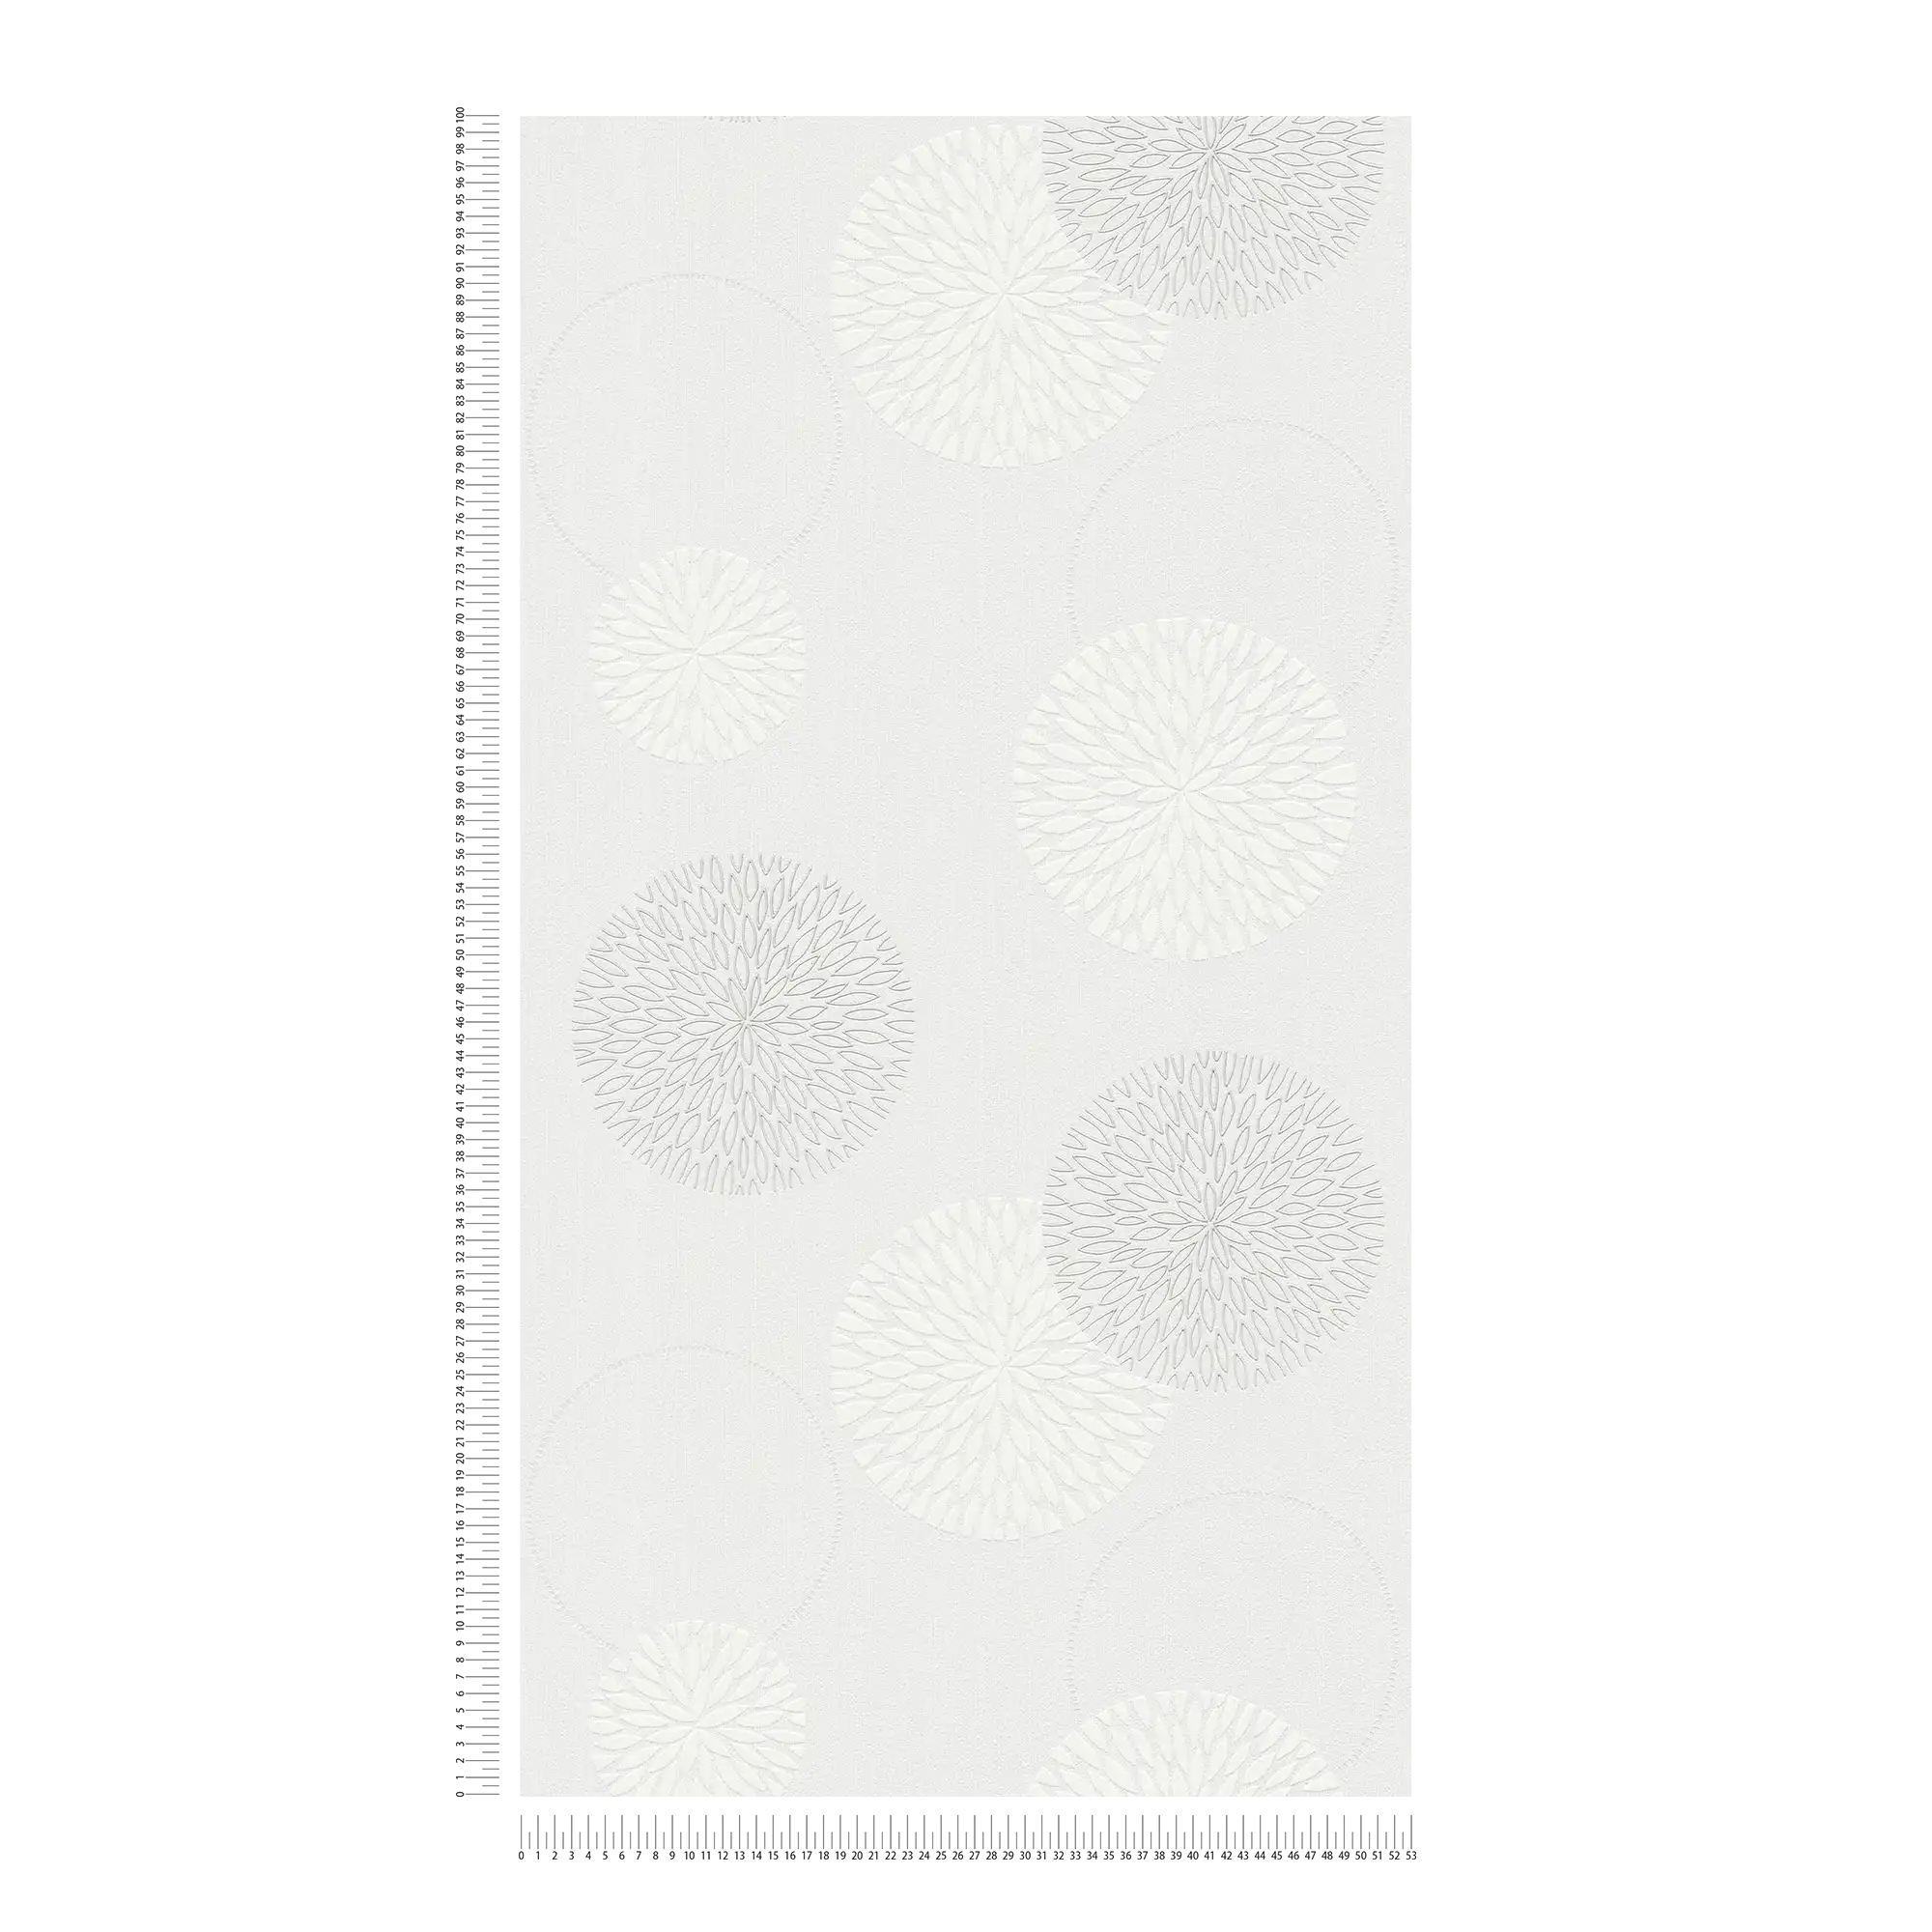             Non-woven wallpaper flowers in abstract design - cream, white
        